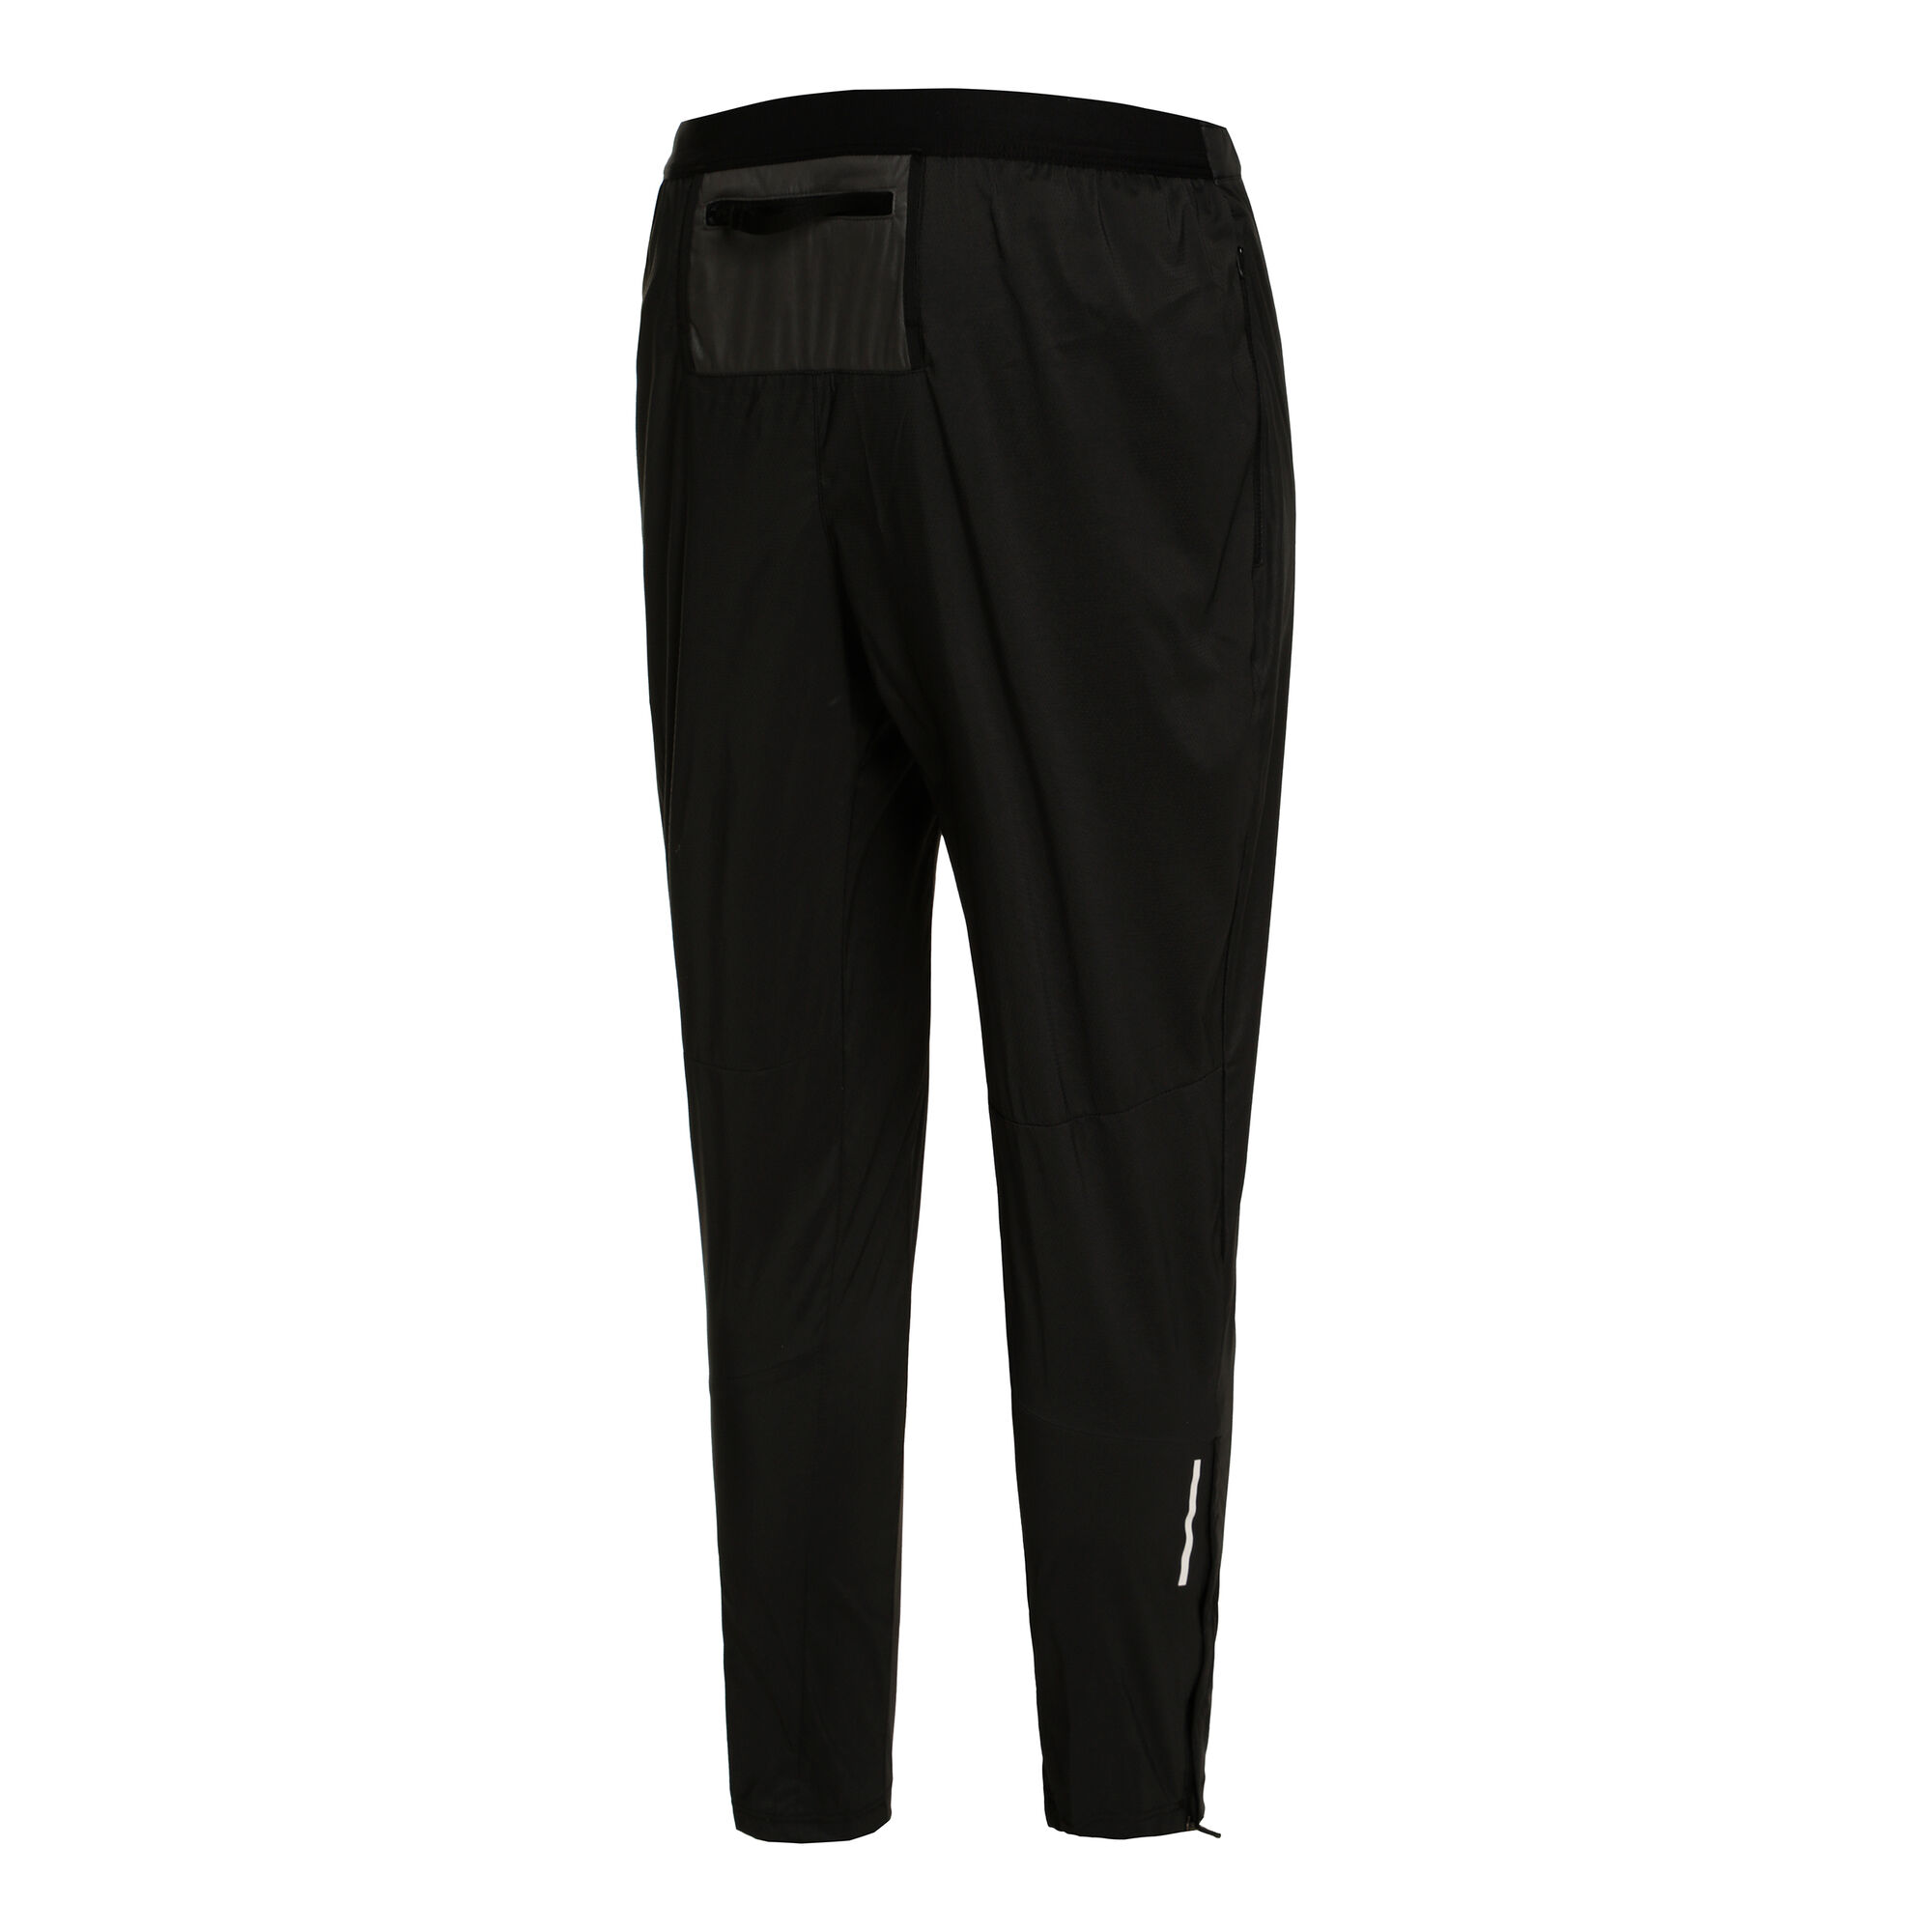 Buy Nike Dri-Fit Trail Phenom Elite Knit Running Pants Men Black, Grey  online